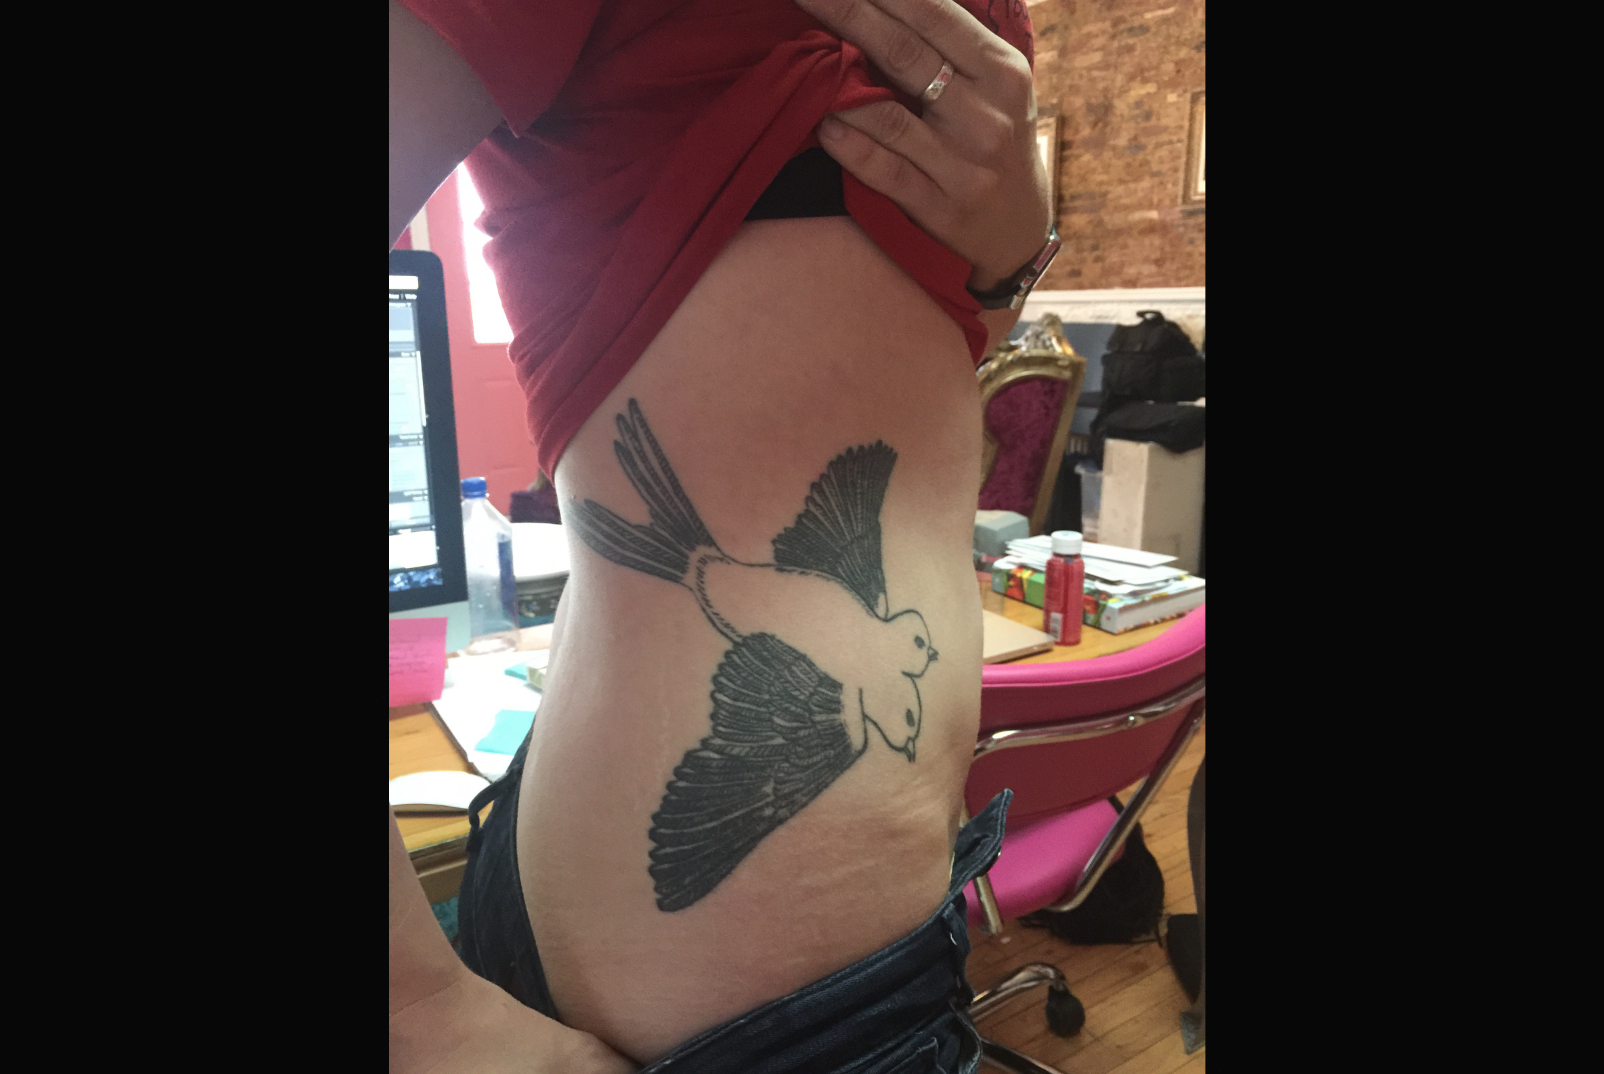 Bird coverup tattoo by Cat at Dark Horse Tattoo in Stafford Virginia  r tattoos